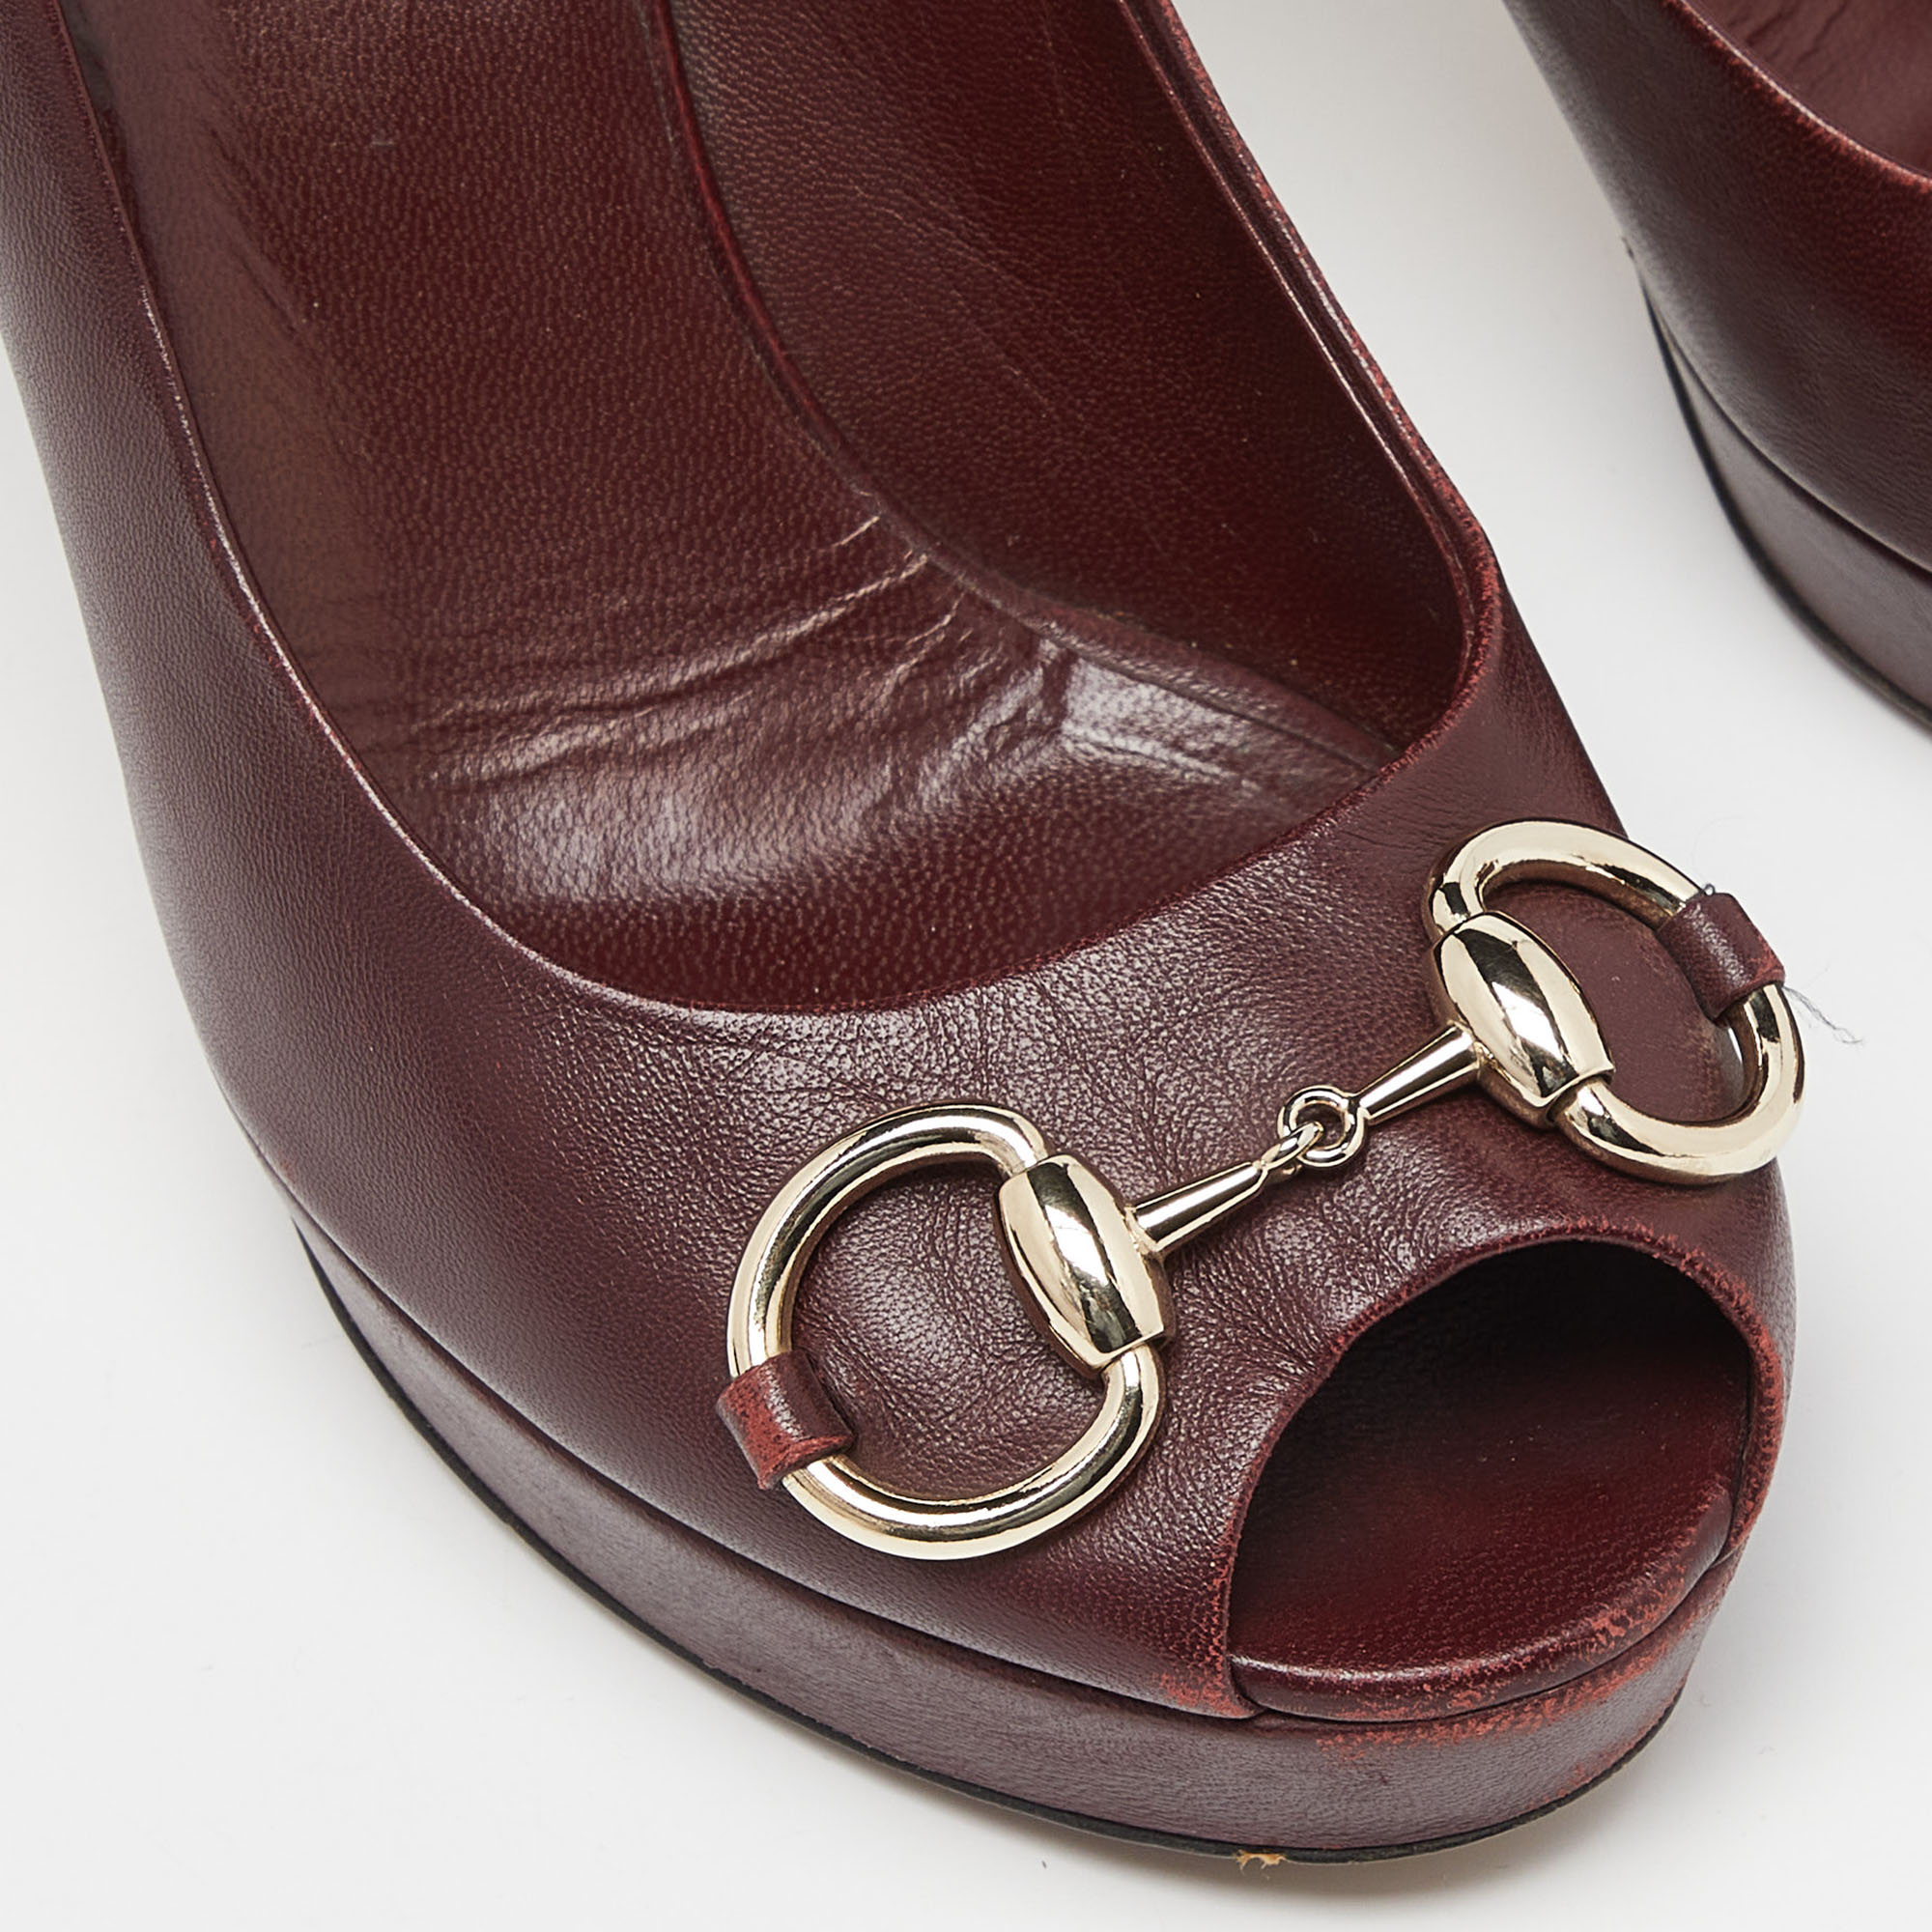 Gucci Burgundy Leather Horsebit Peep Toe Platform Pumps Size 37